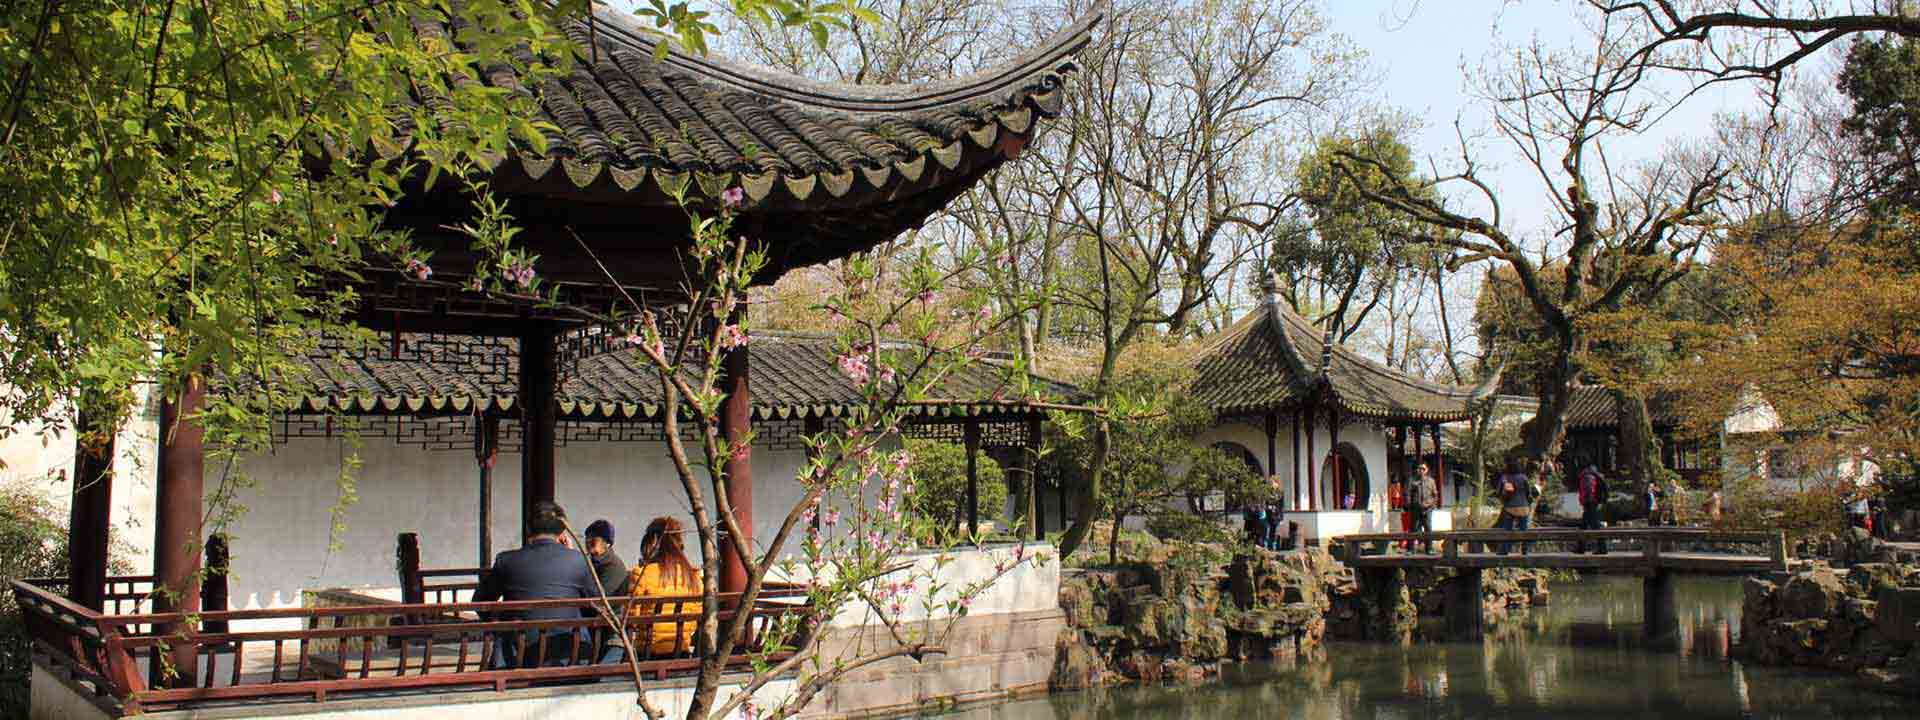 Gardens of Suzhou, Suzhou Tours